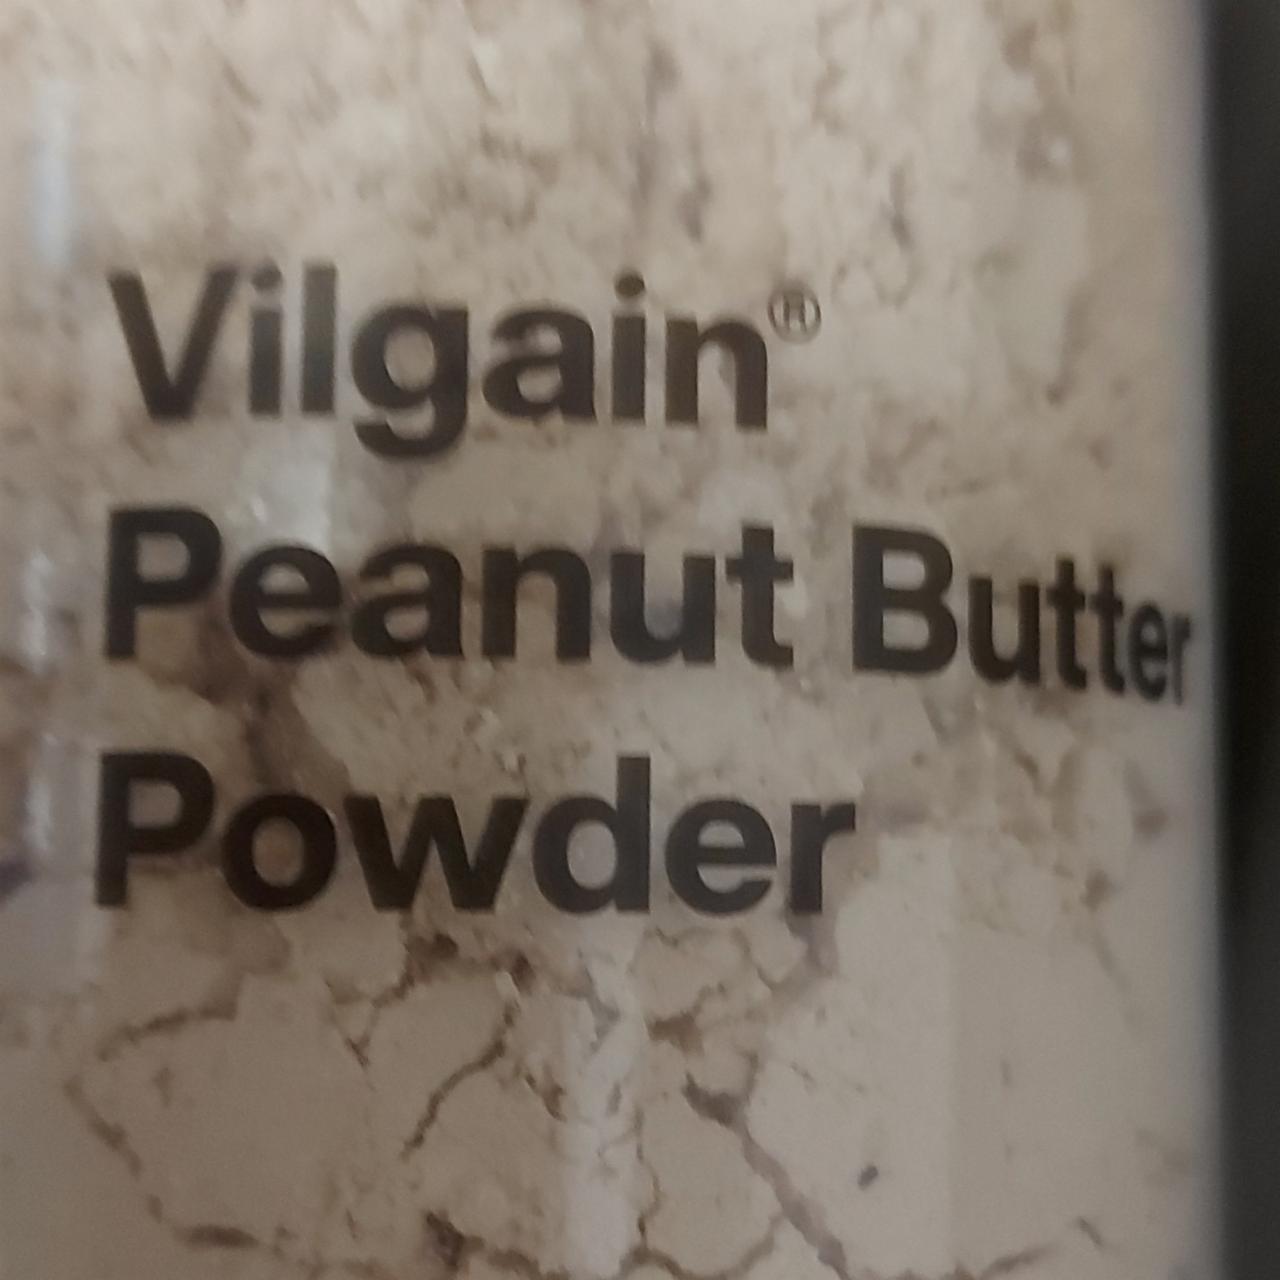 Fotografie - Peanut butter powder Vilgain